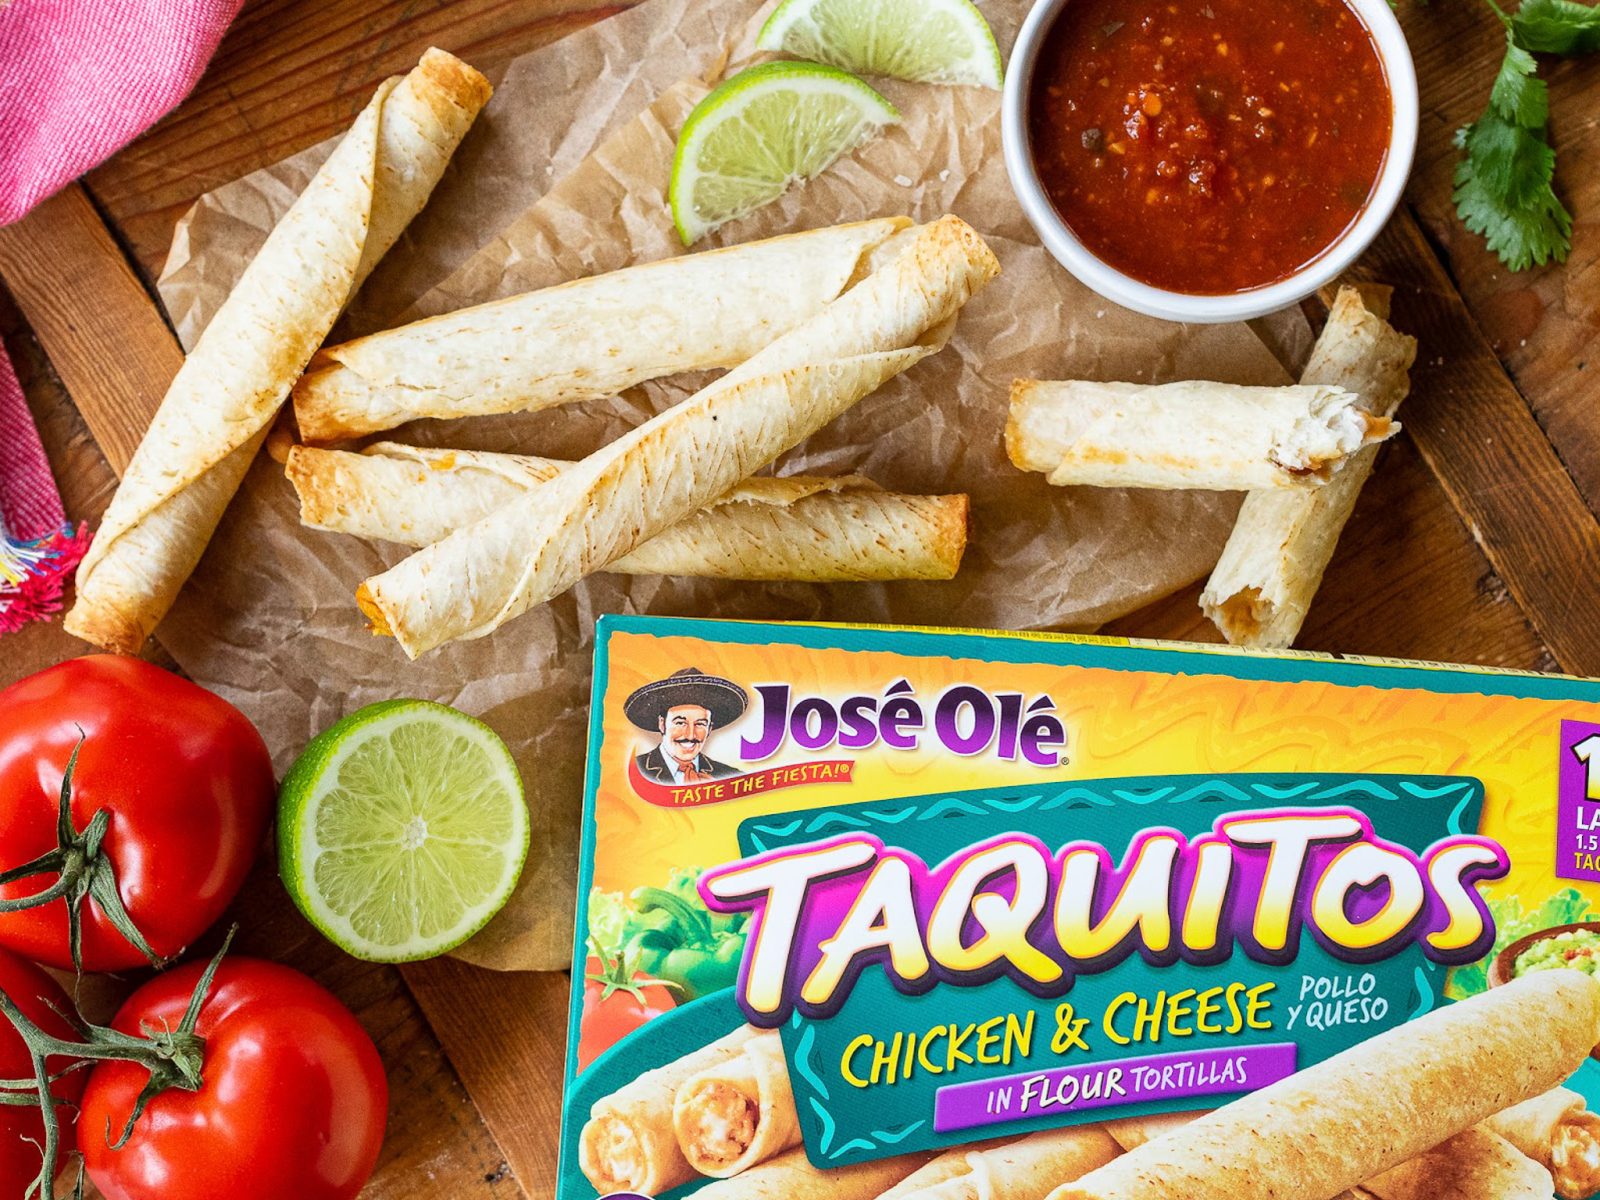 Jose Ole Taquitos or Mini Tacos Just $4.74 At Kroger (Regular Price $7.29)